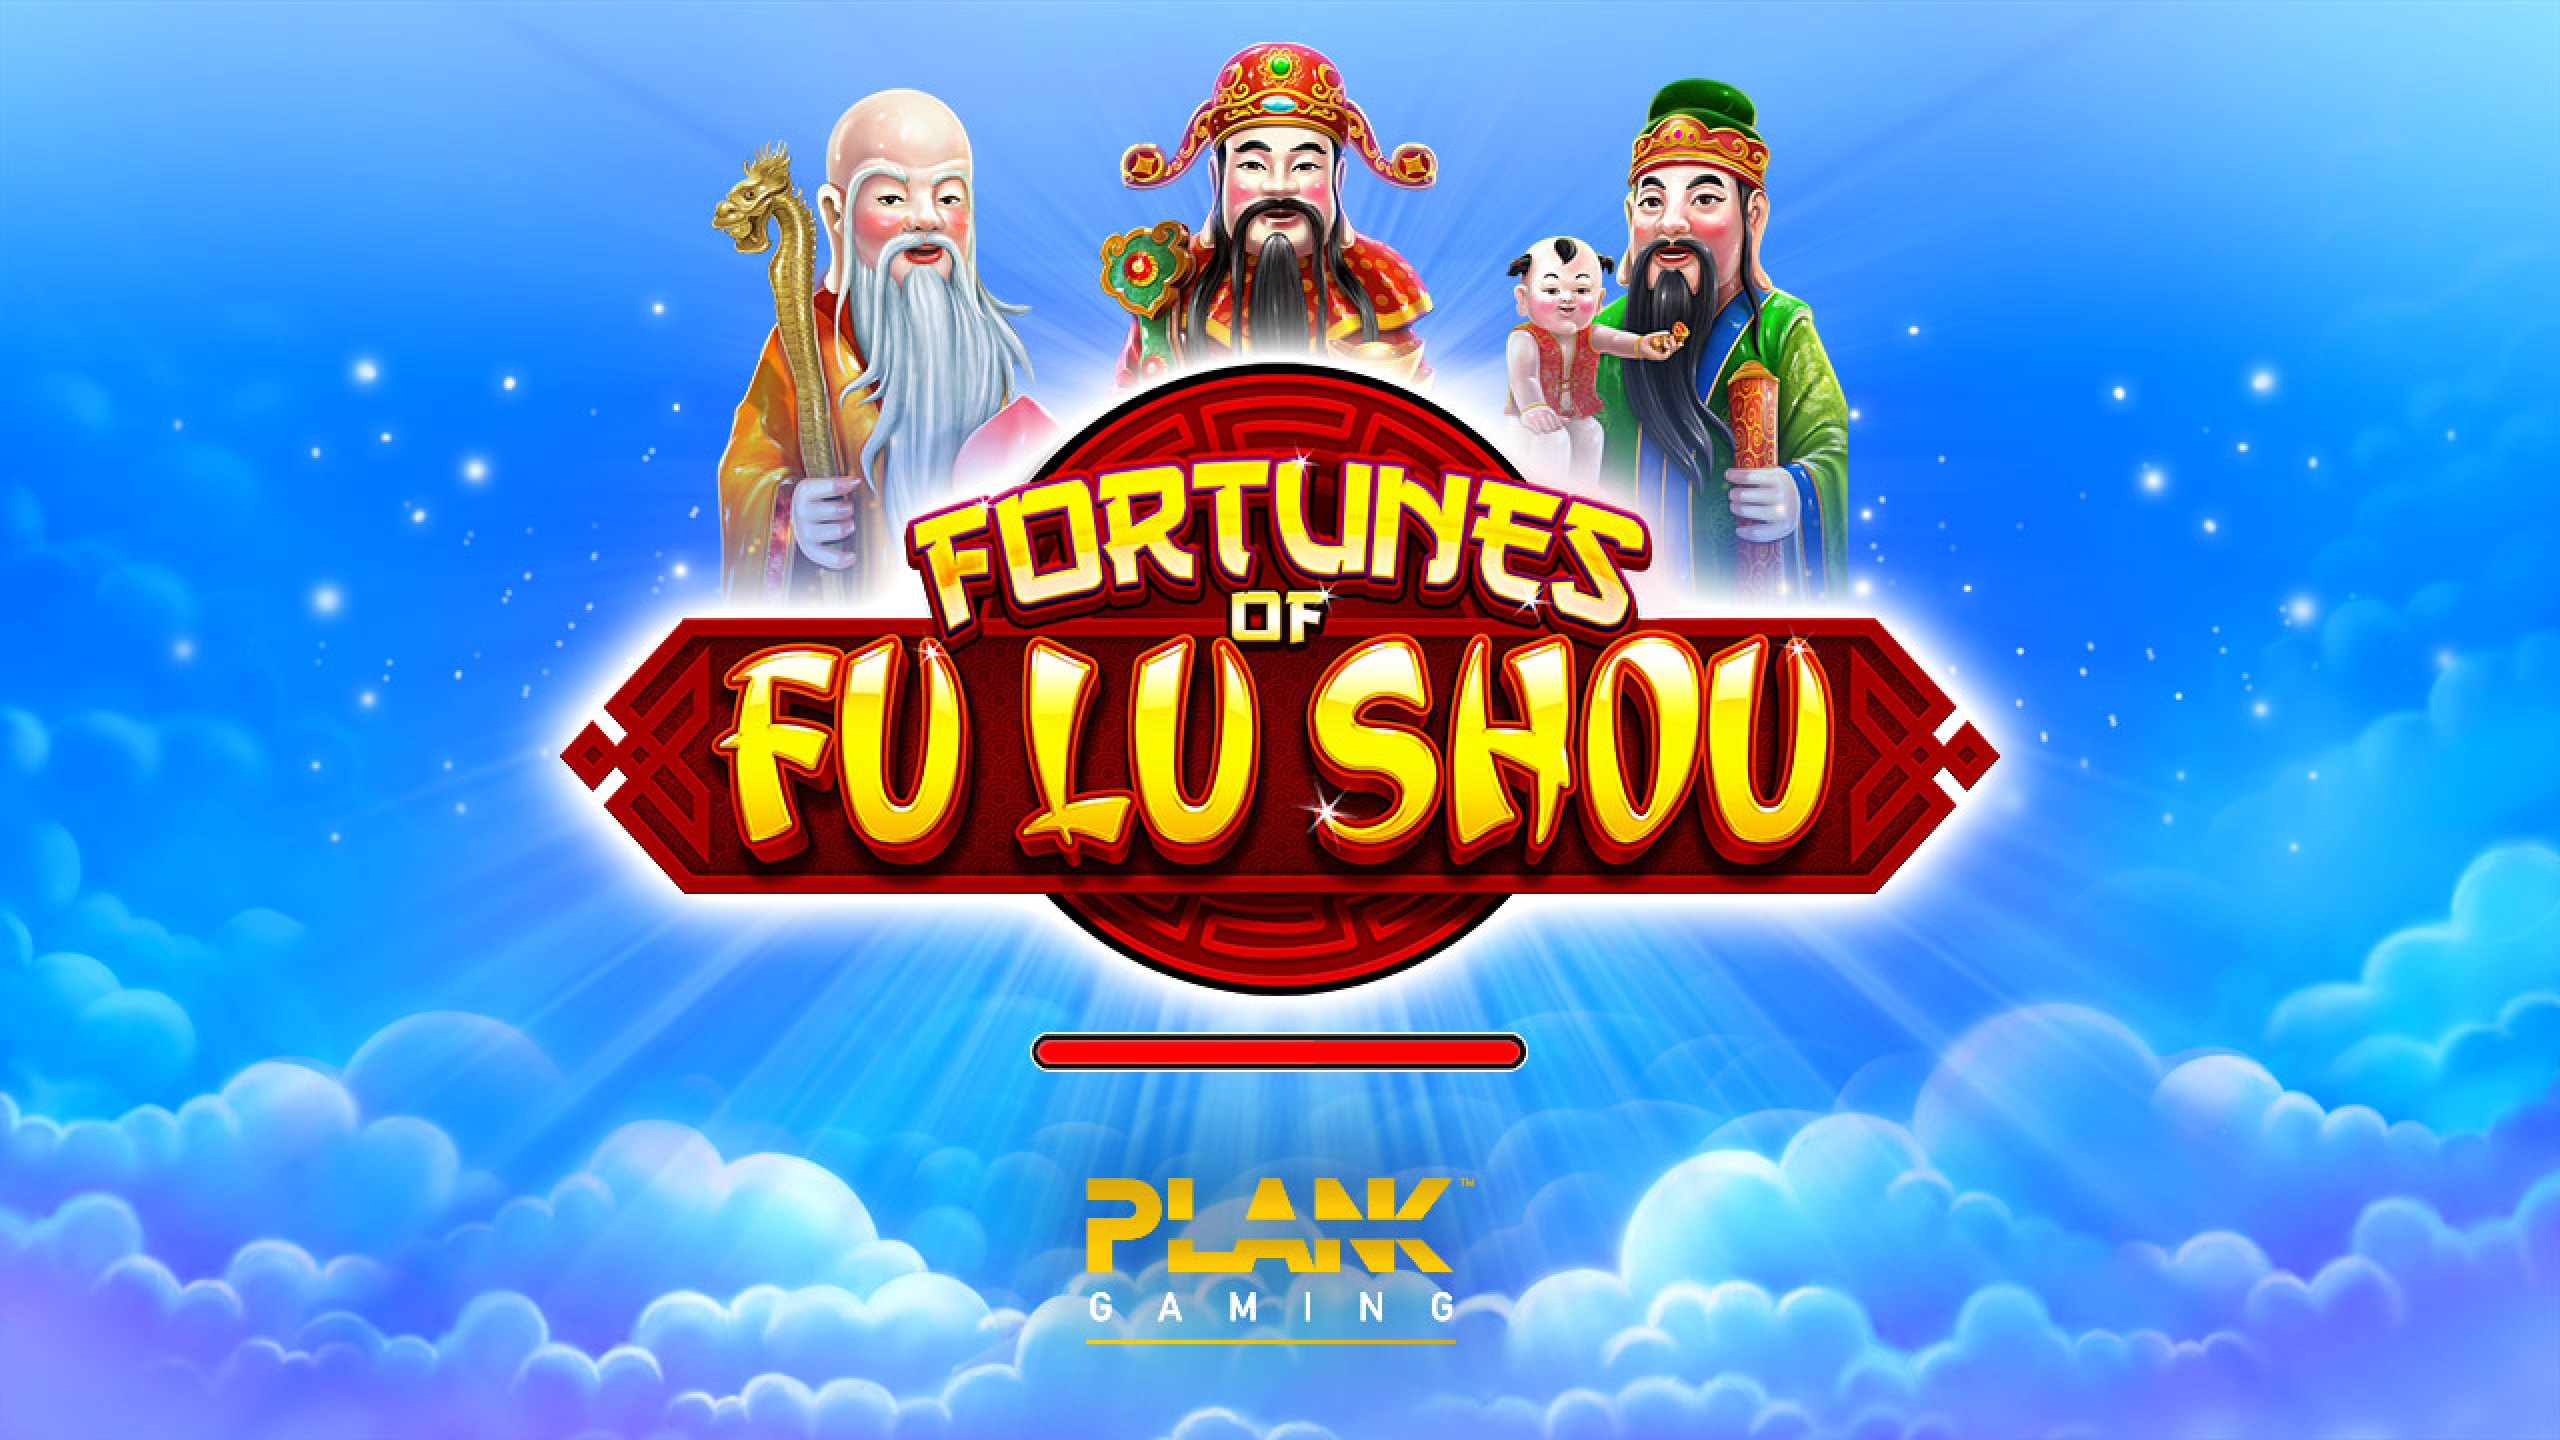 Fortunes of Fu Lu Shou demo